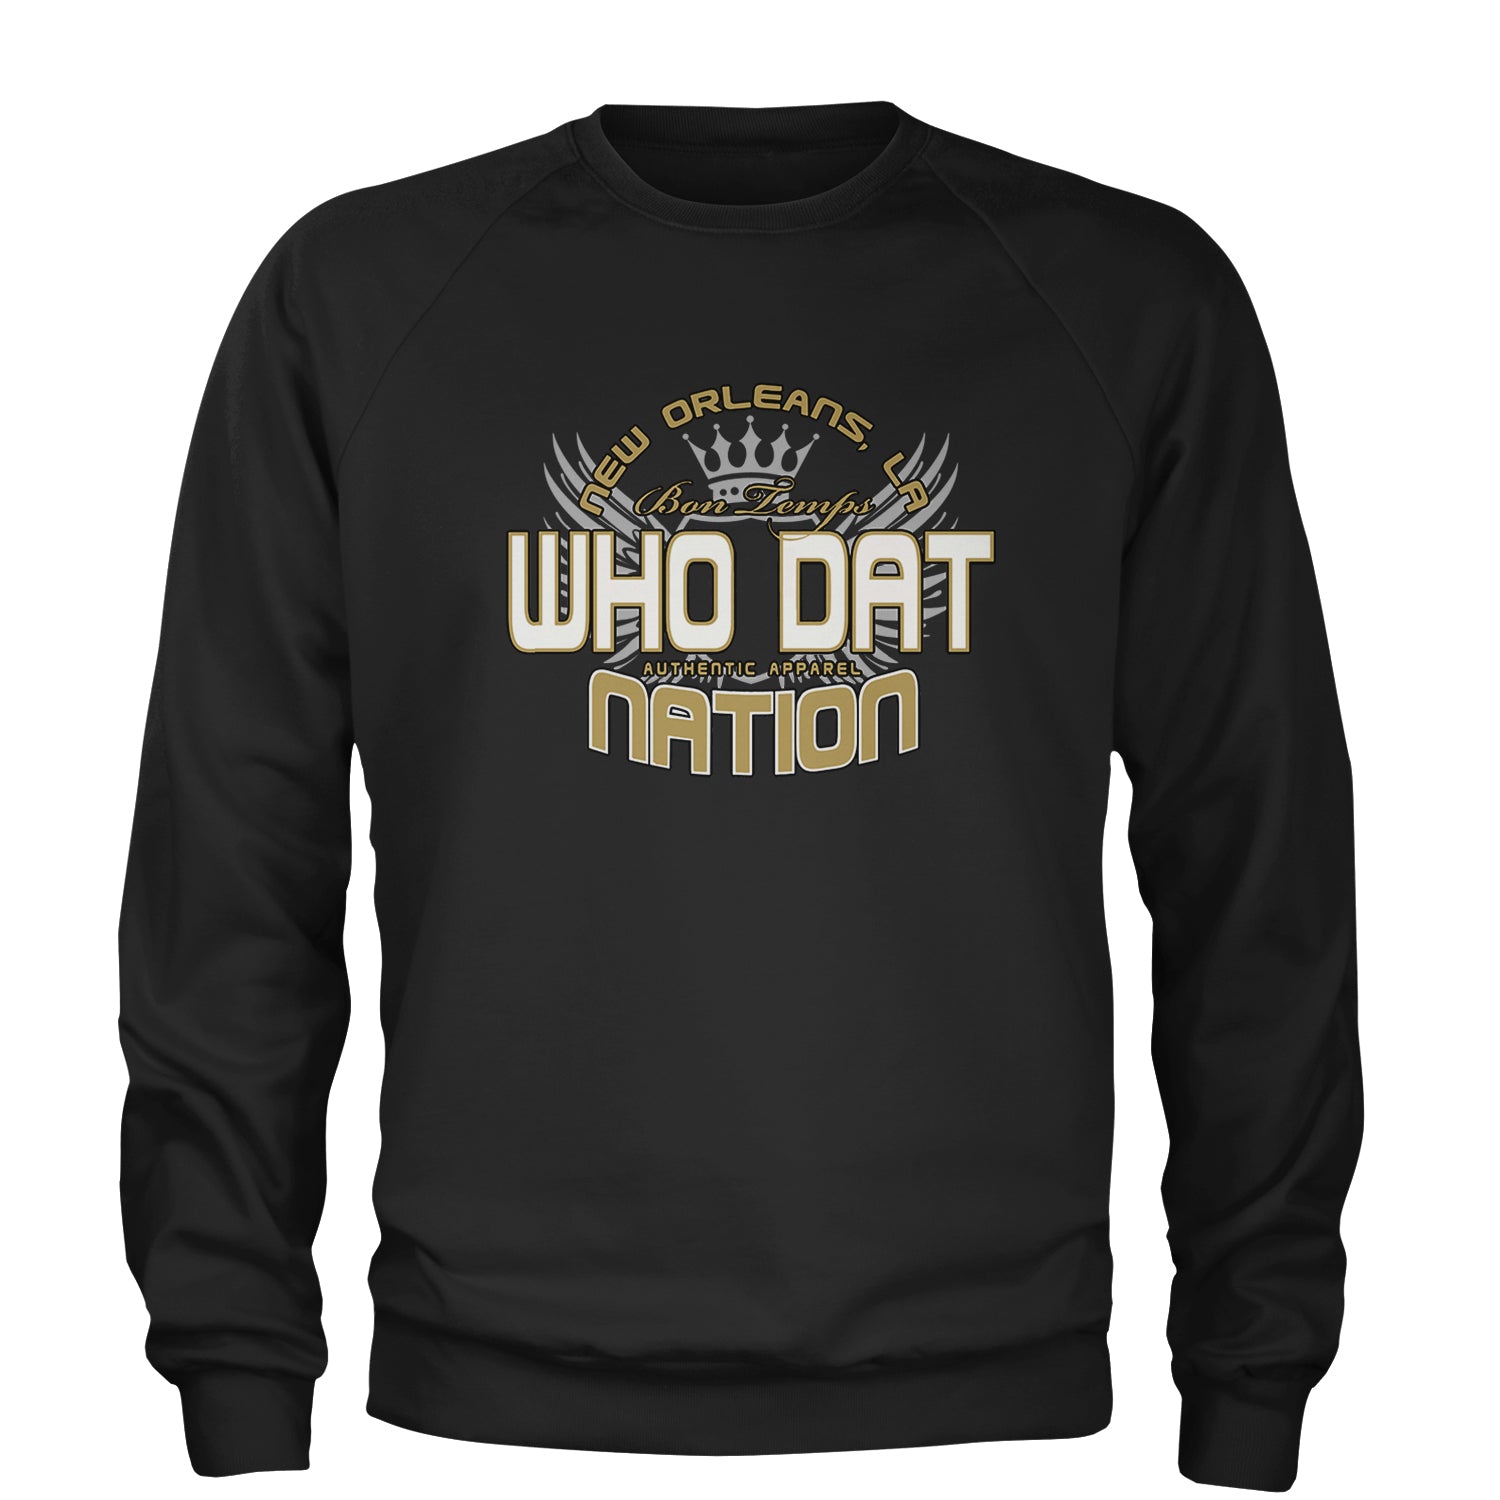 Who Dat Nation New Orleans (Color) Adult Crewneck Sweatshirt